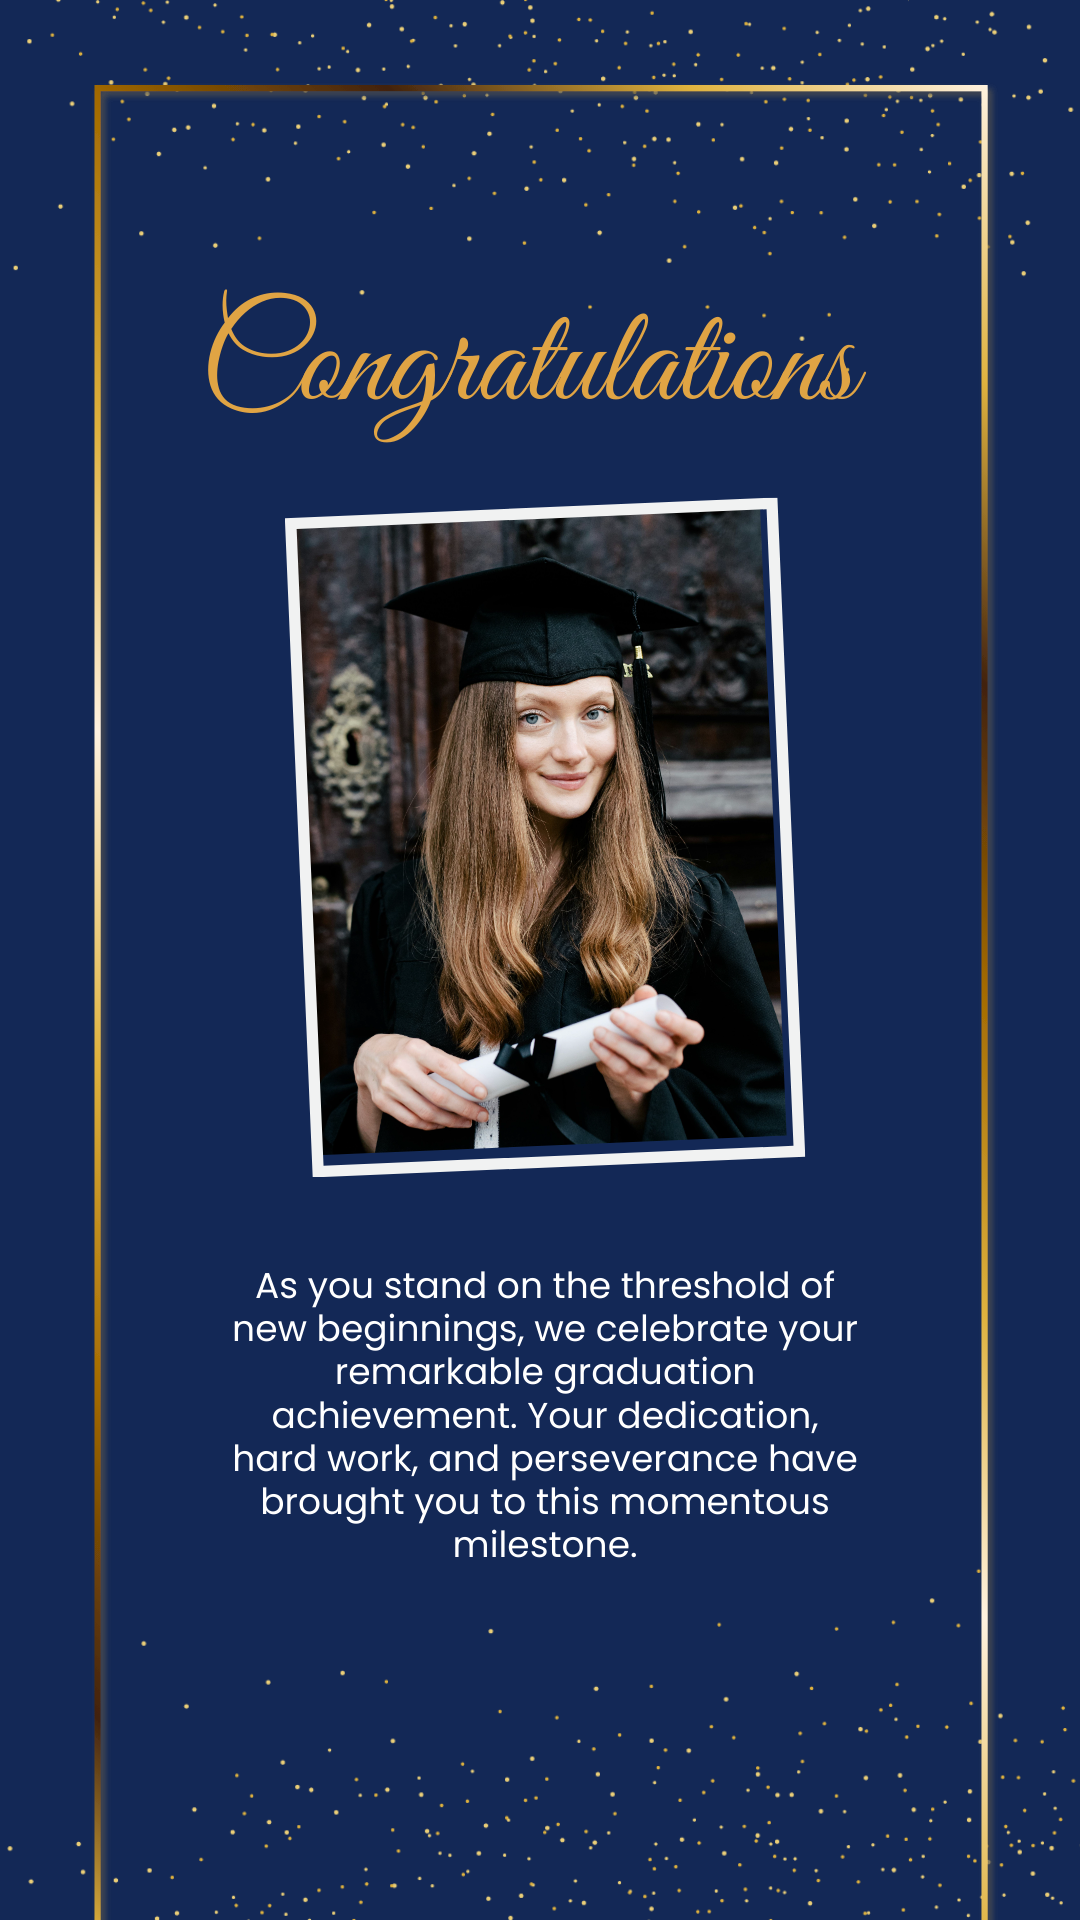 Congratulations to graduate Greeting Card